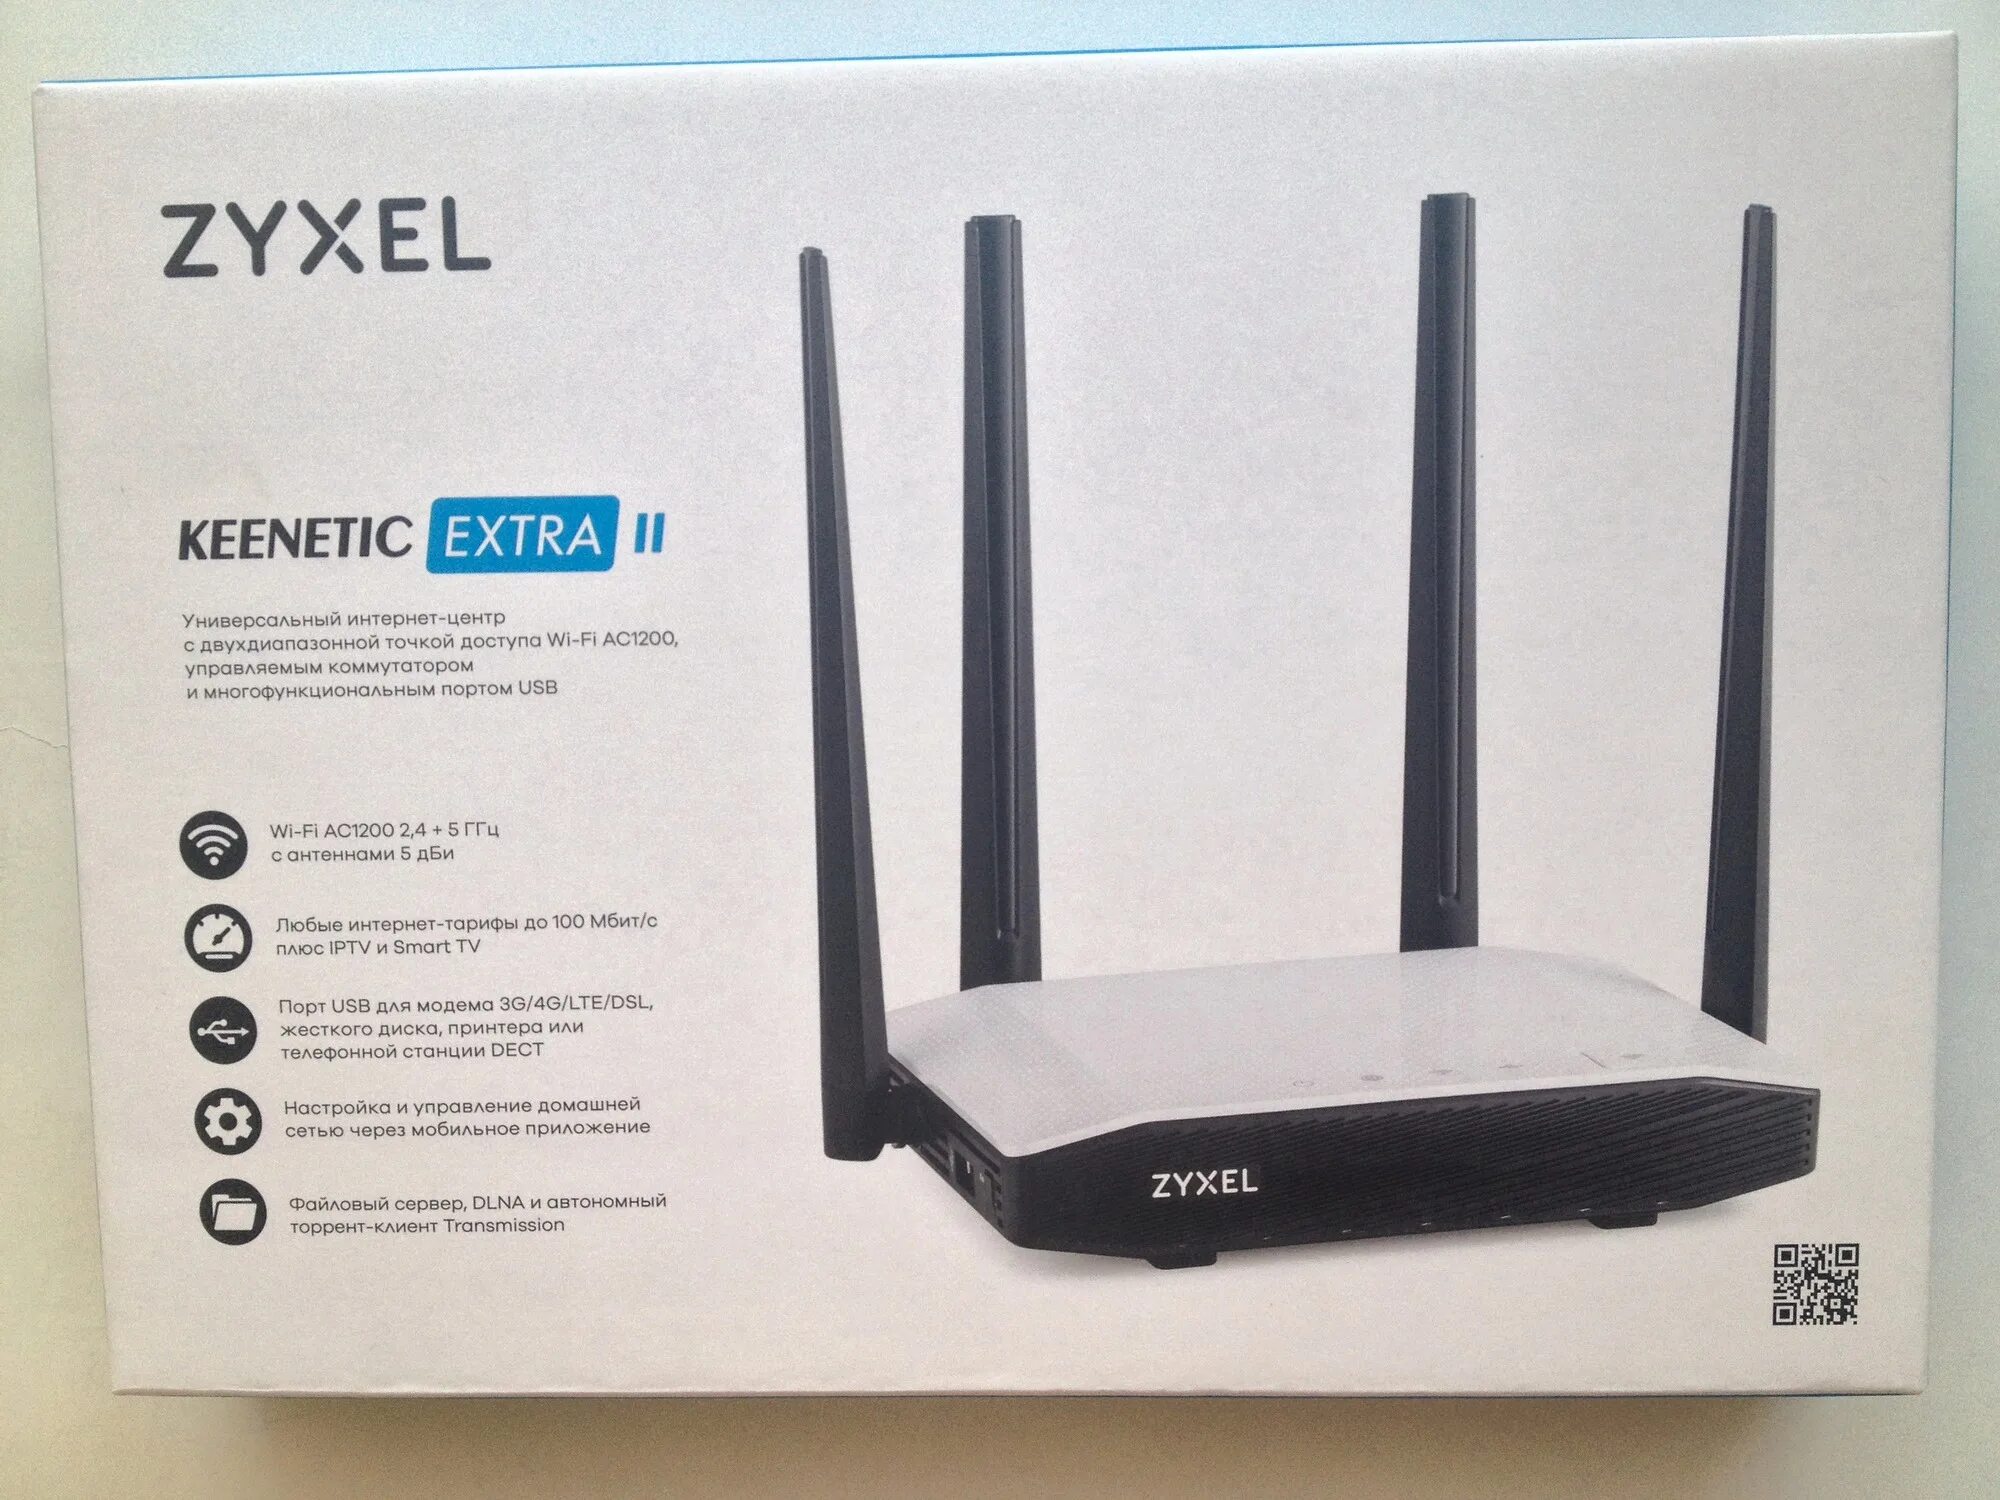 Wi-Fi роутер ZYXEL B-6010. Wi-Fi роутер Keenetic Extra коробка. Роутер ZYXEL Keenetic Giga II. ZYXEL Keenetic Extra 3.